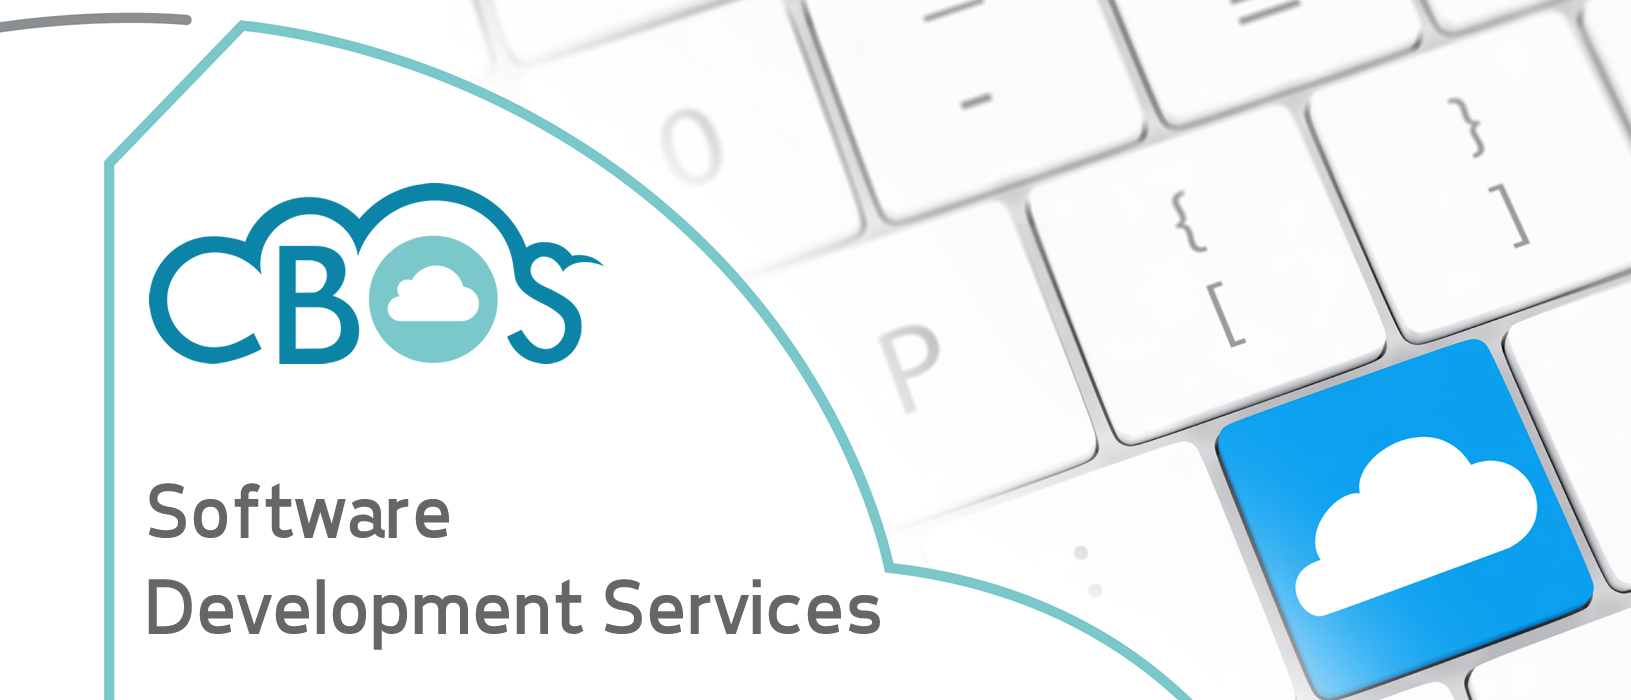 CBOS Software Development Services